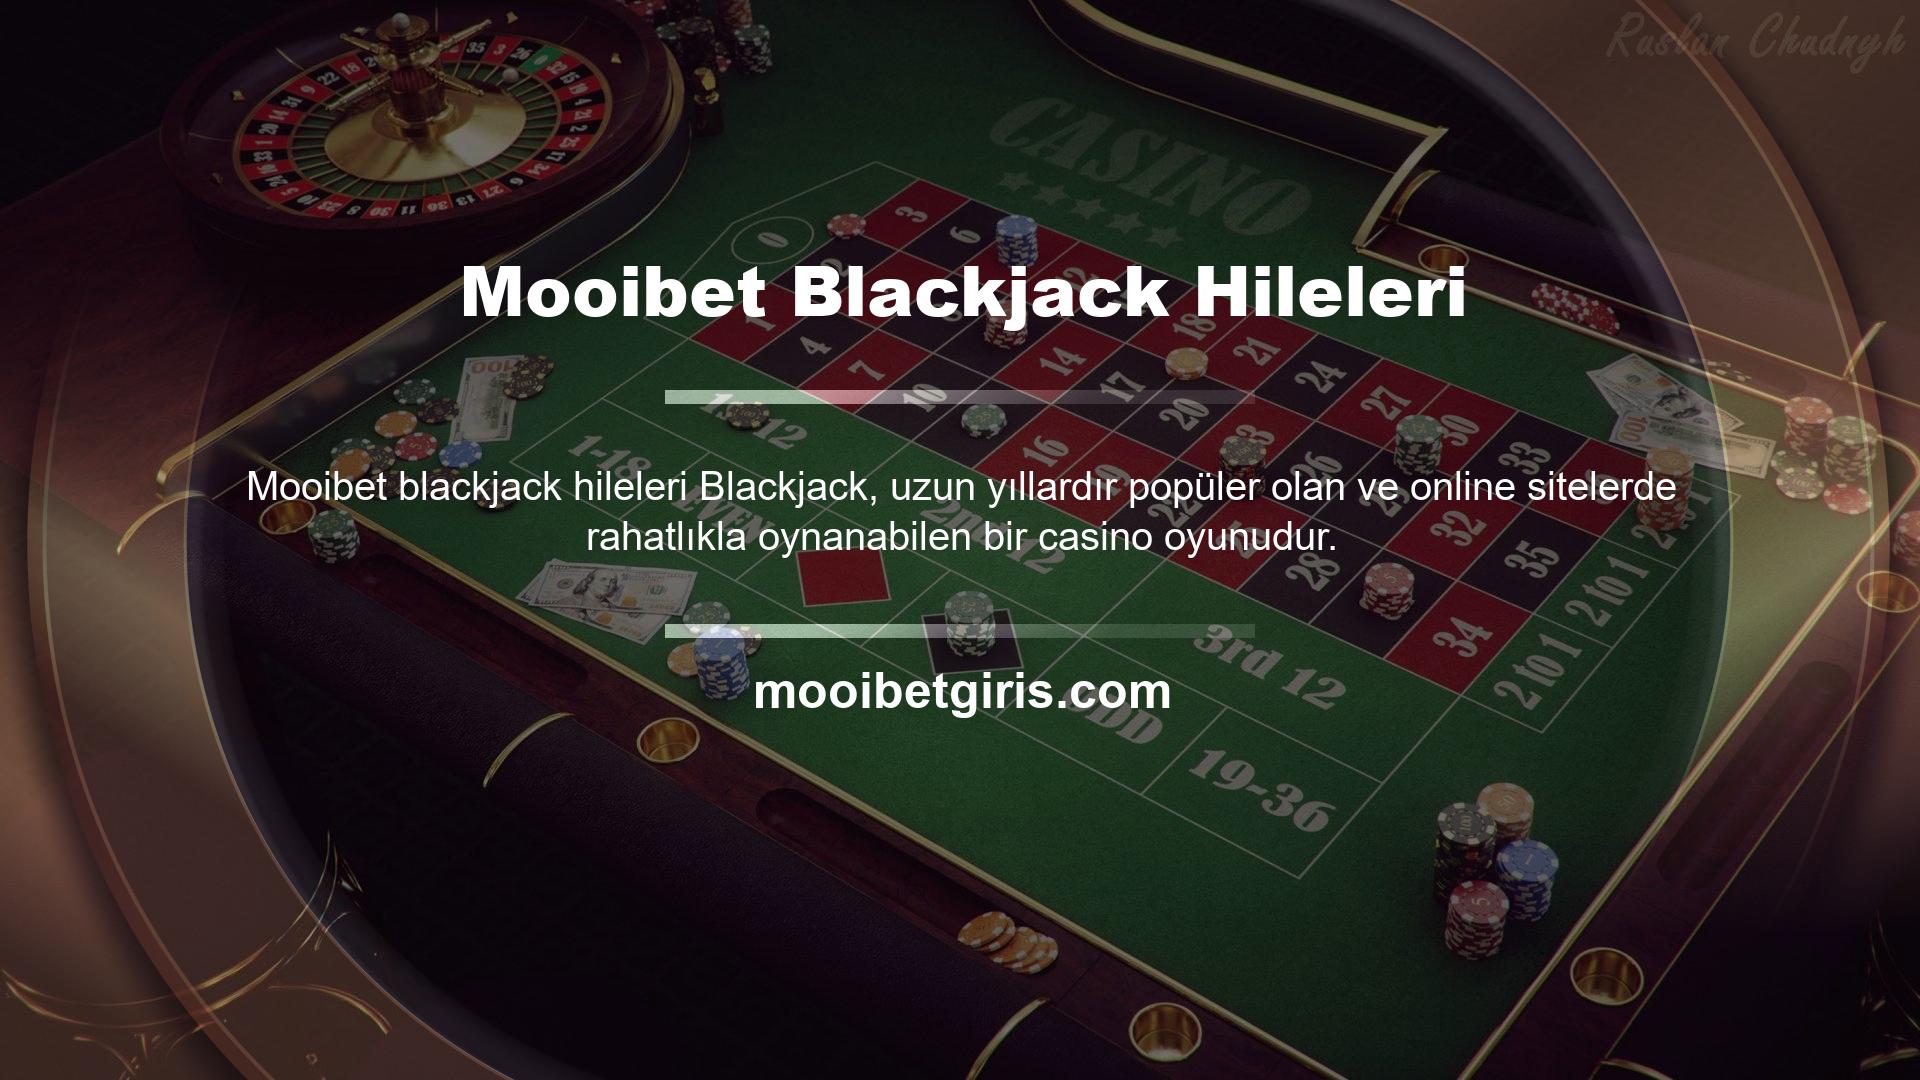 Mooibet Blackjack Hileleri